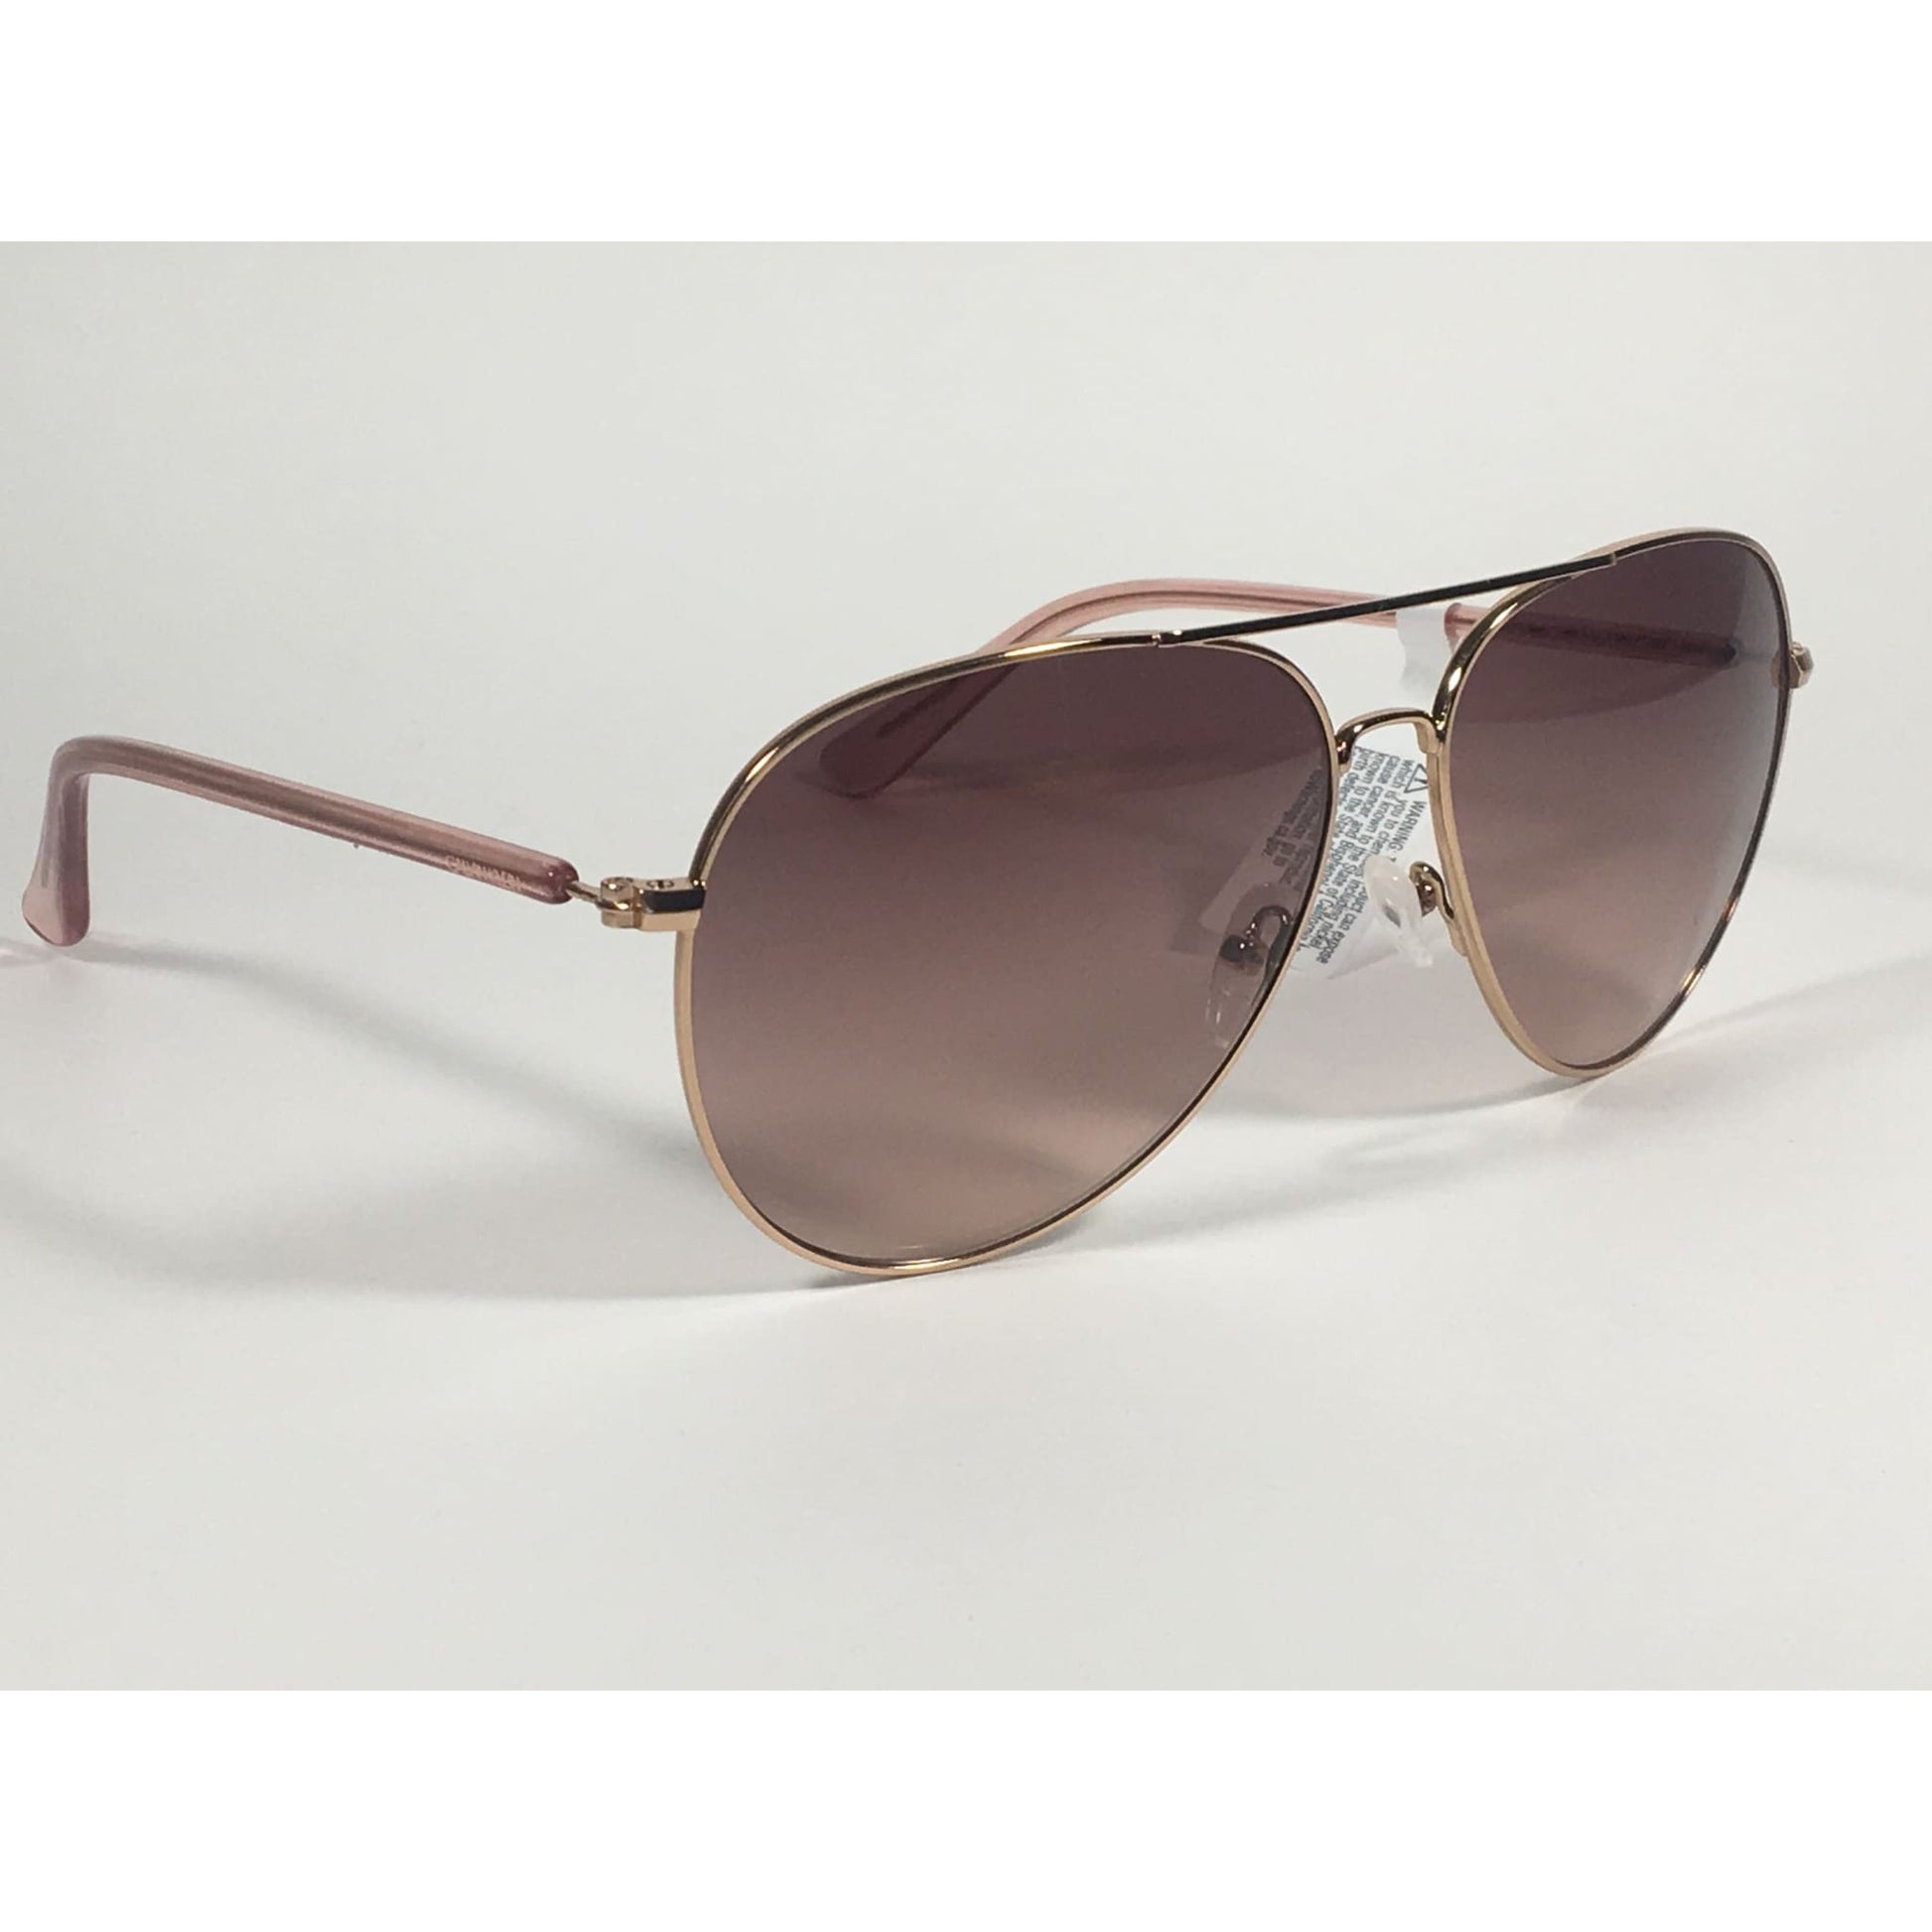 Calvin Klein CK19314S 780 Aviator Pilot Sunglasses Rose Gold With Brown Rose Gradient Lens - Sunglasses